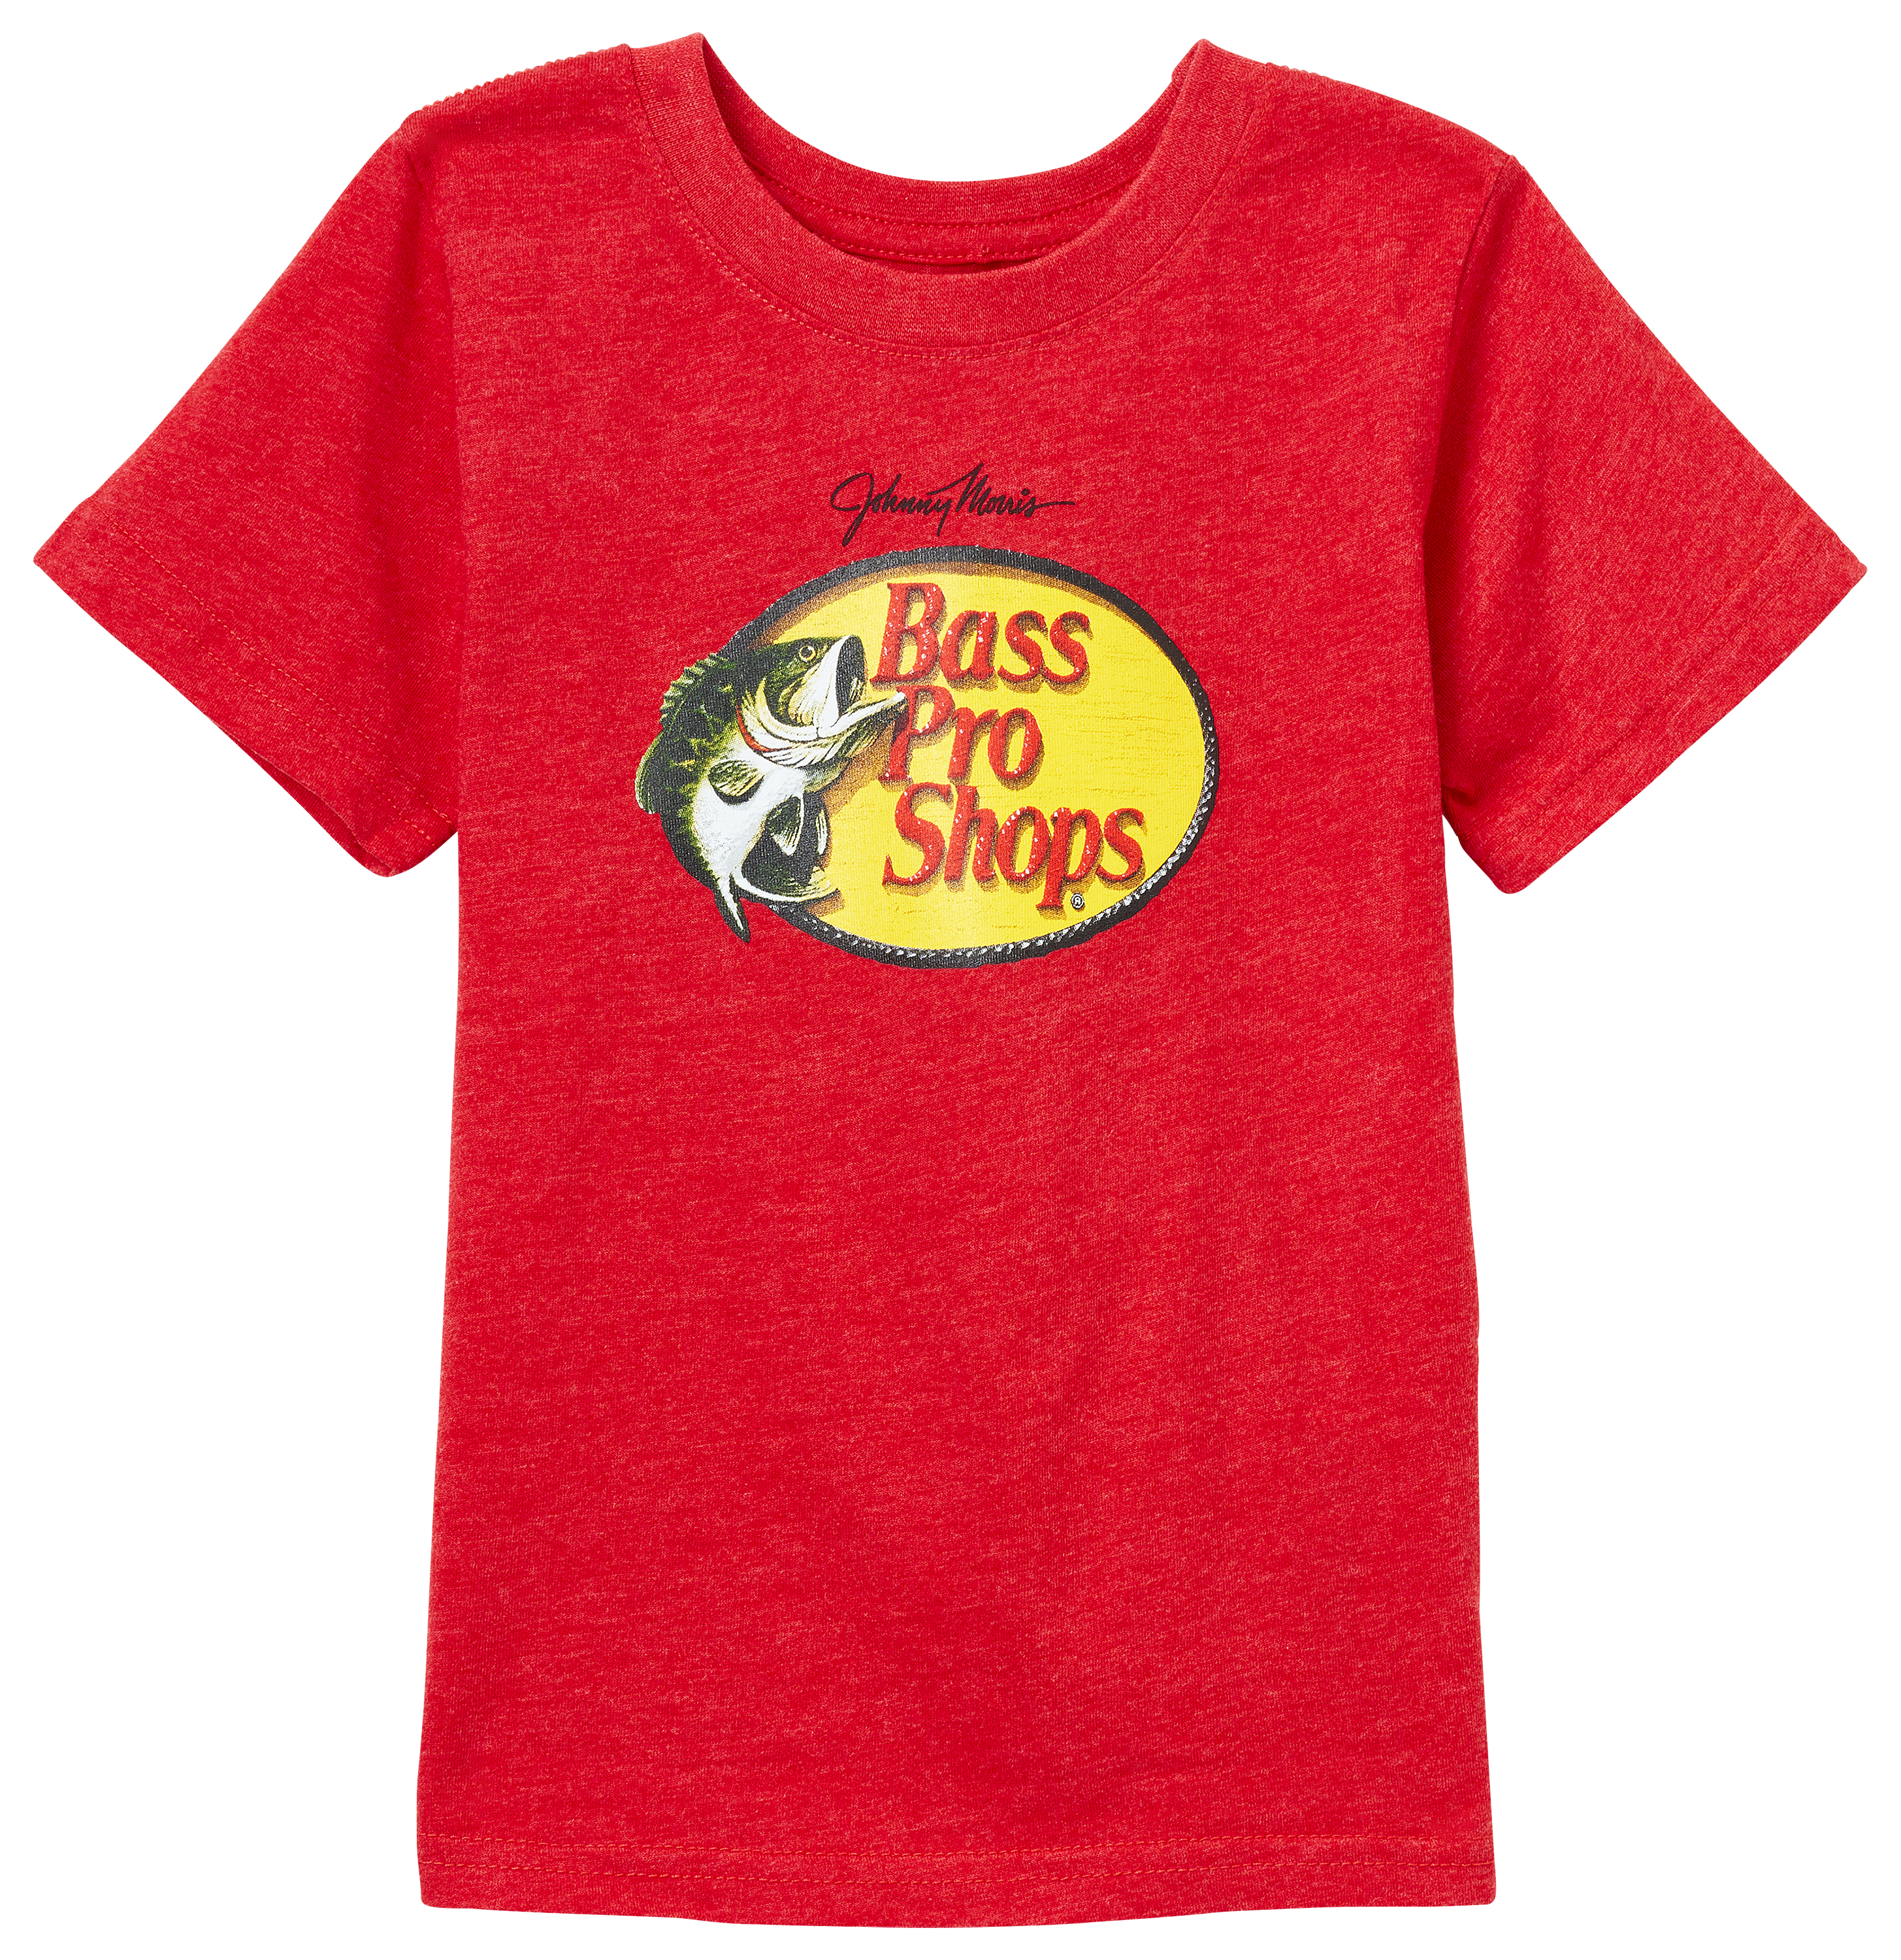 Bass Pro Shops Woodcut Short-Sleeve T-Shirt for Kids - Red - S